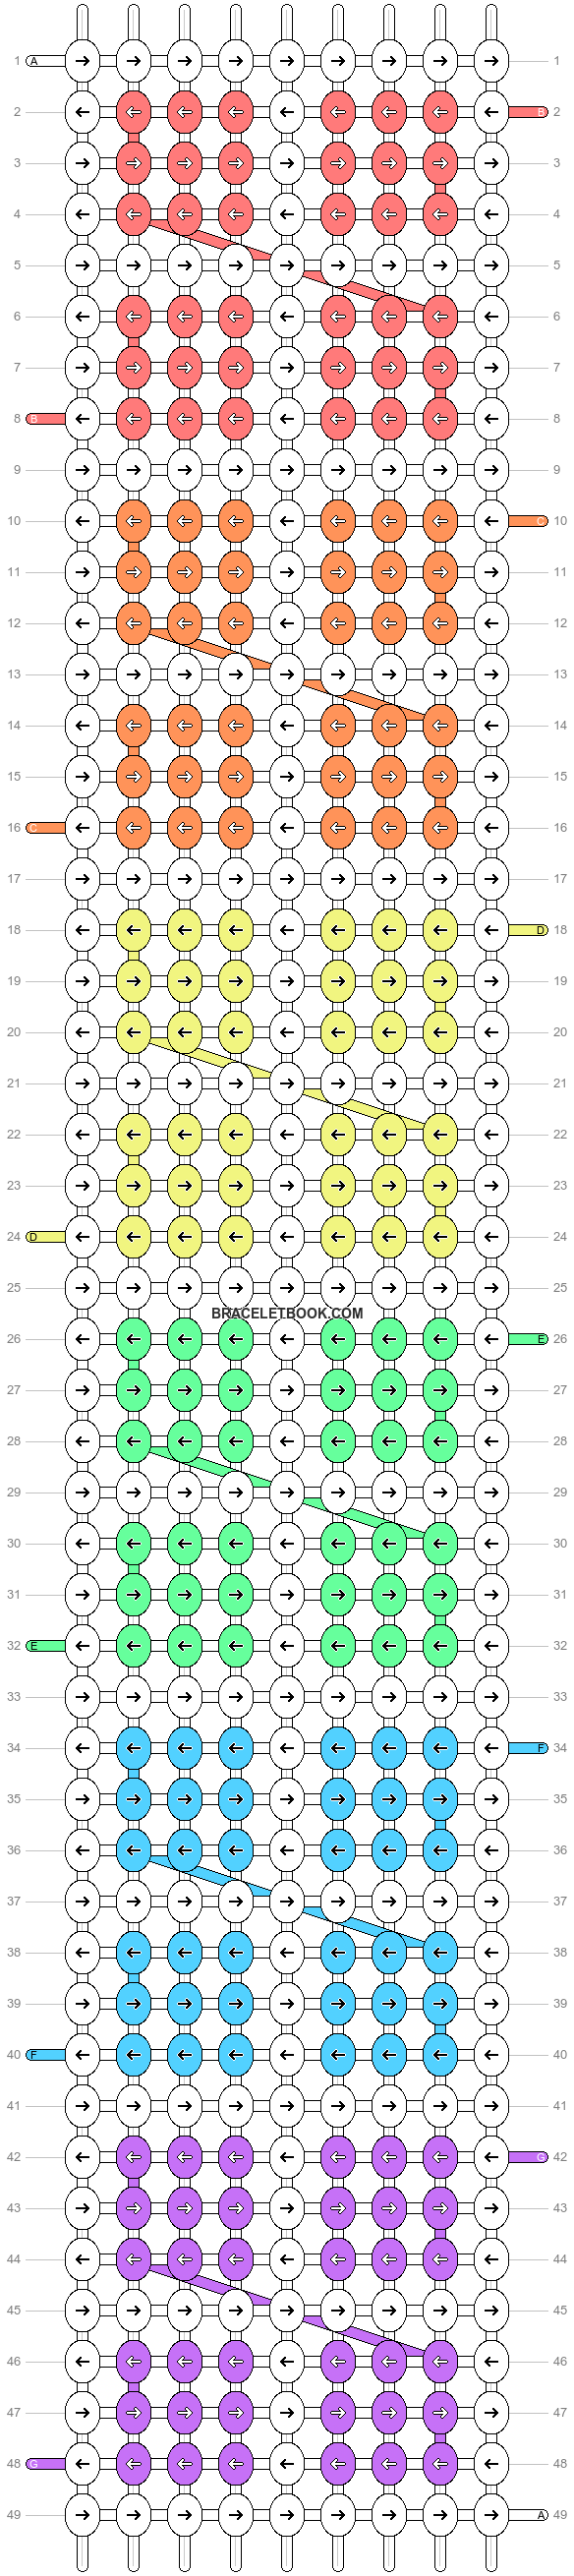 Alpha pattern #17916 variation #54798 pattern